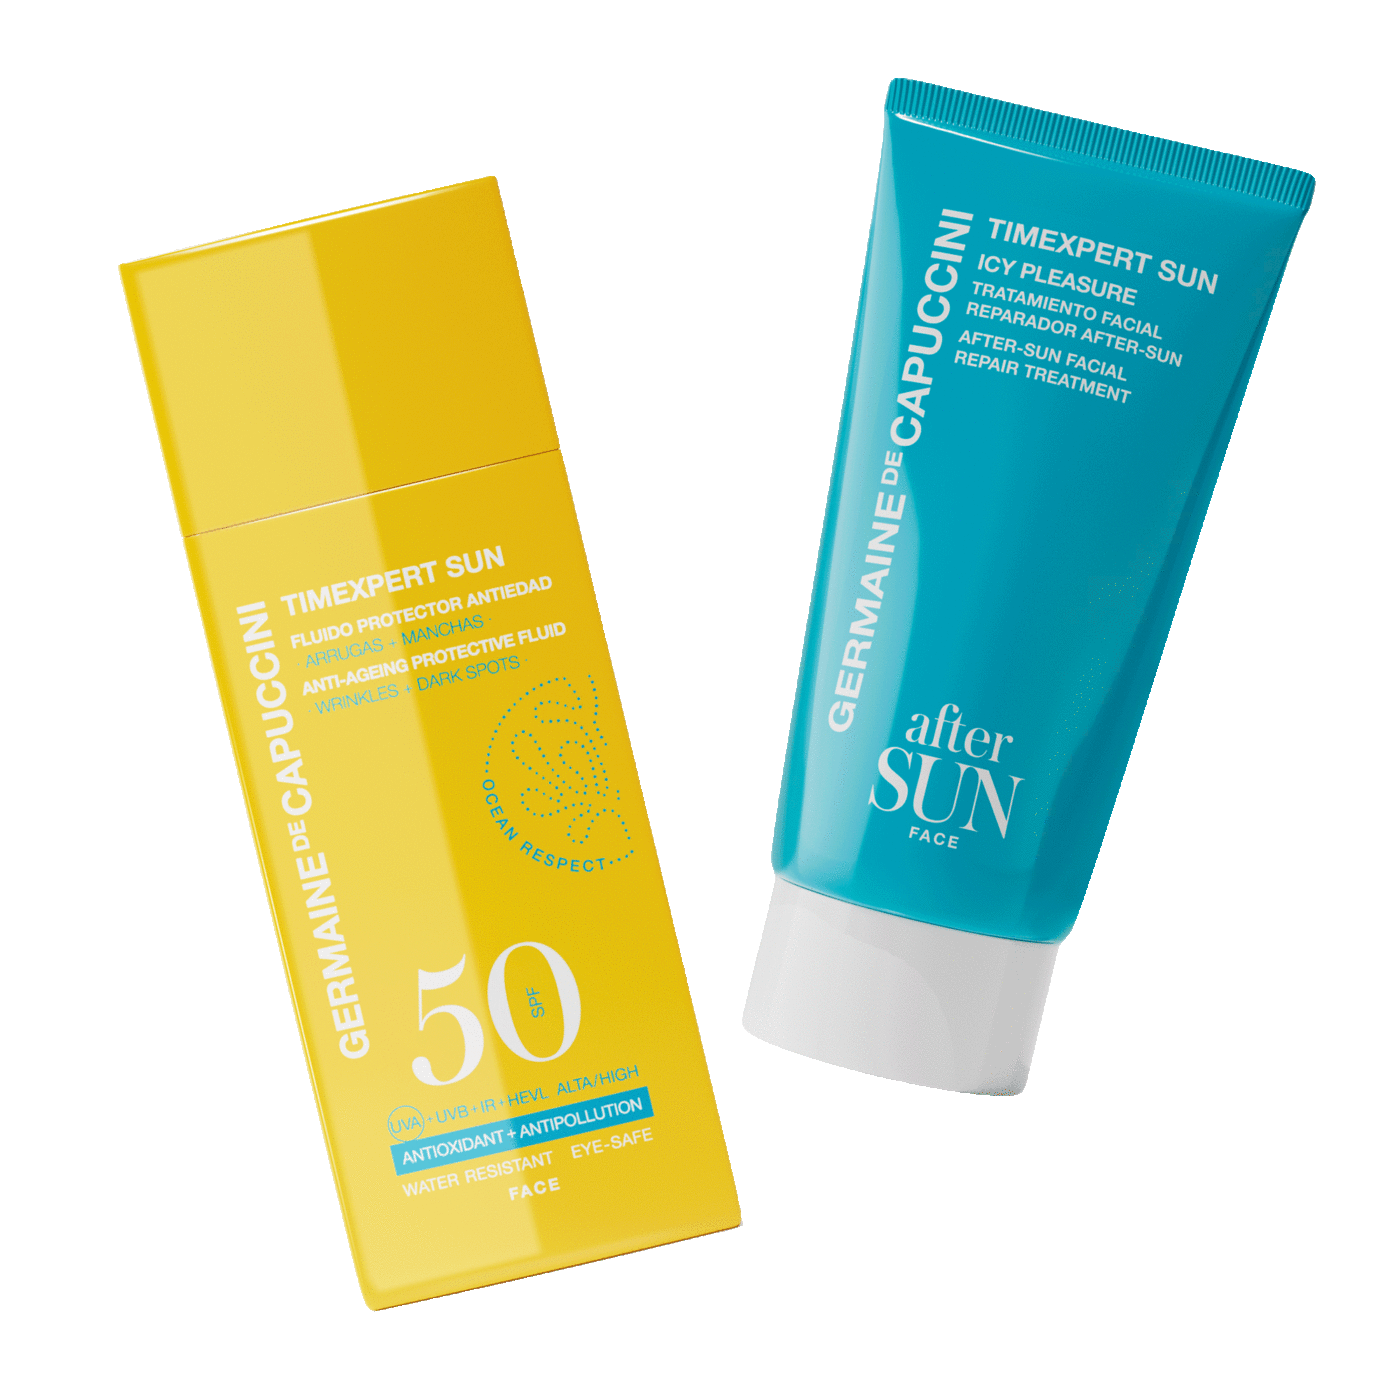 Live The Sun Set Timexpert Sun Anti-Ageing Protective Fluid SPF50 50ml & After-Sun Facial Repair Treatment – 50ml